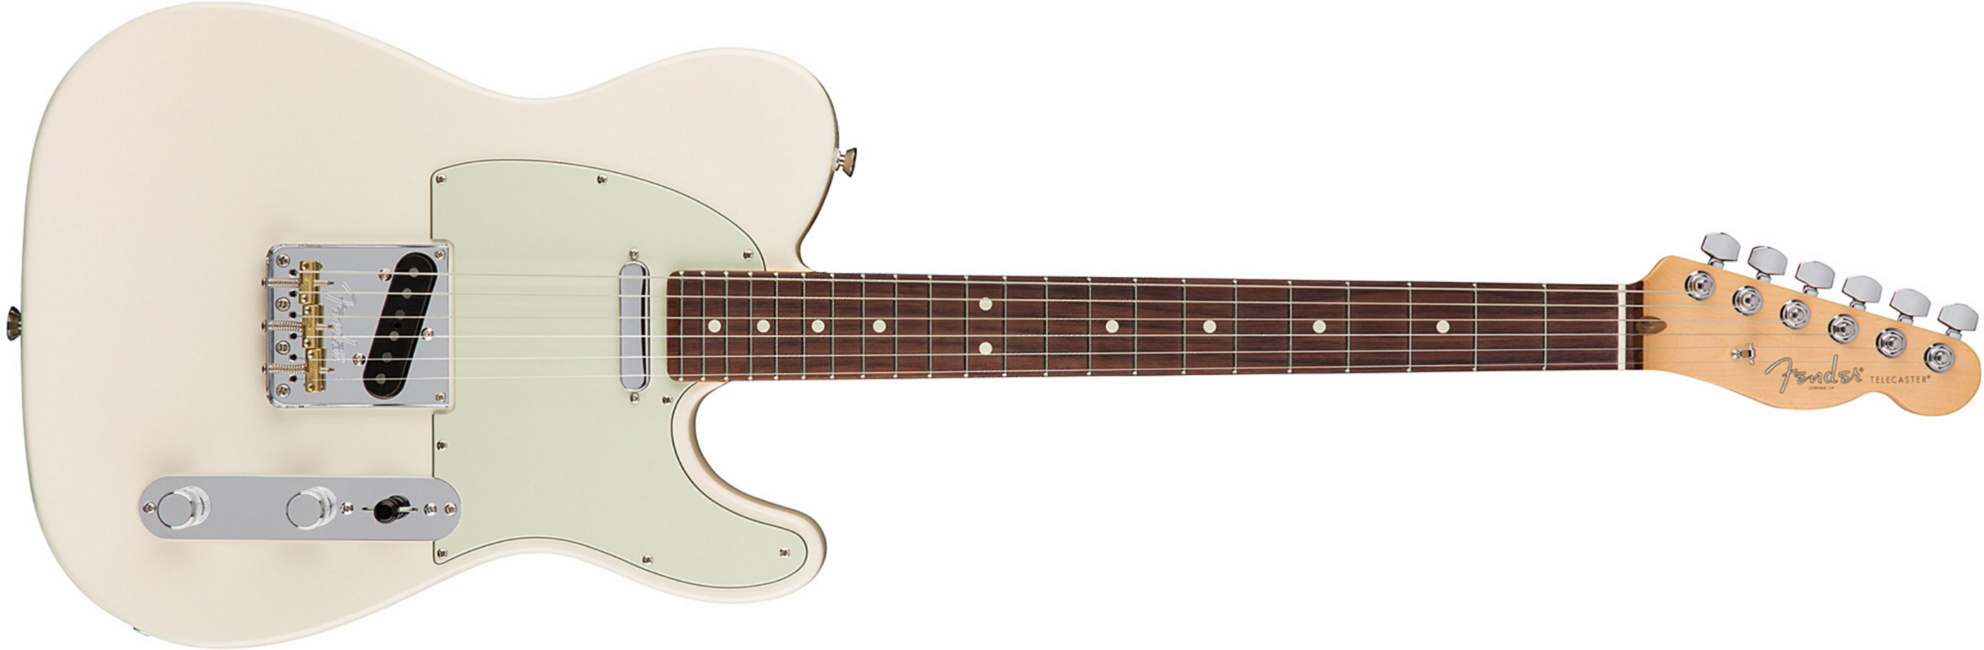 Fender Tele American Professional 2s Usa Rw - Olympic White - Televorm elektrische gitaar - Main picture